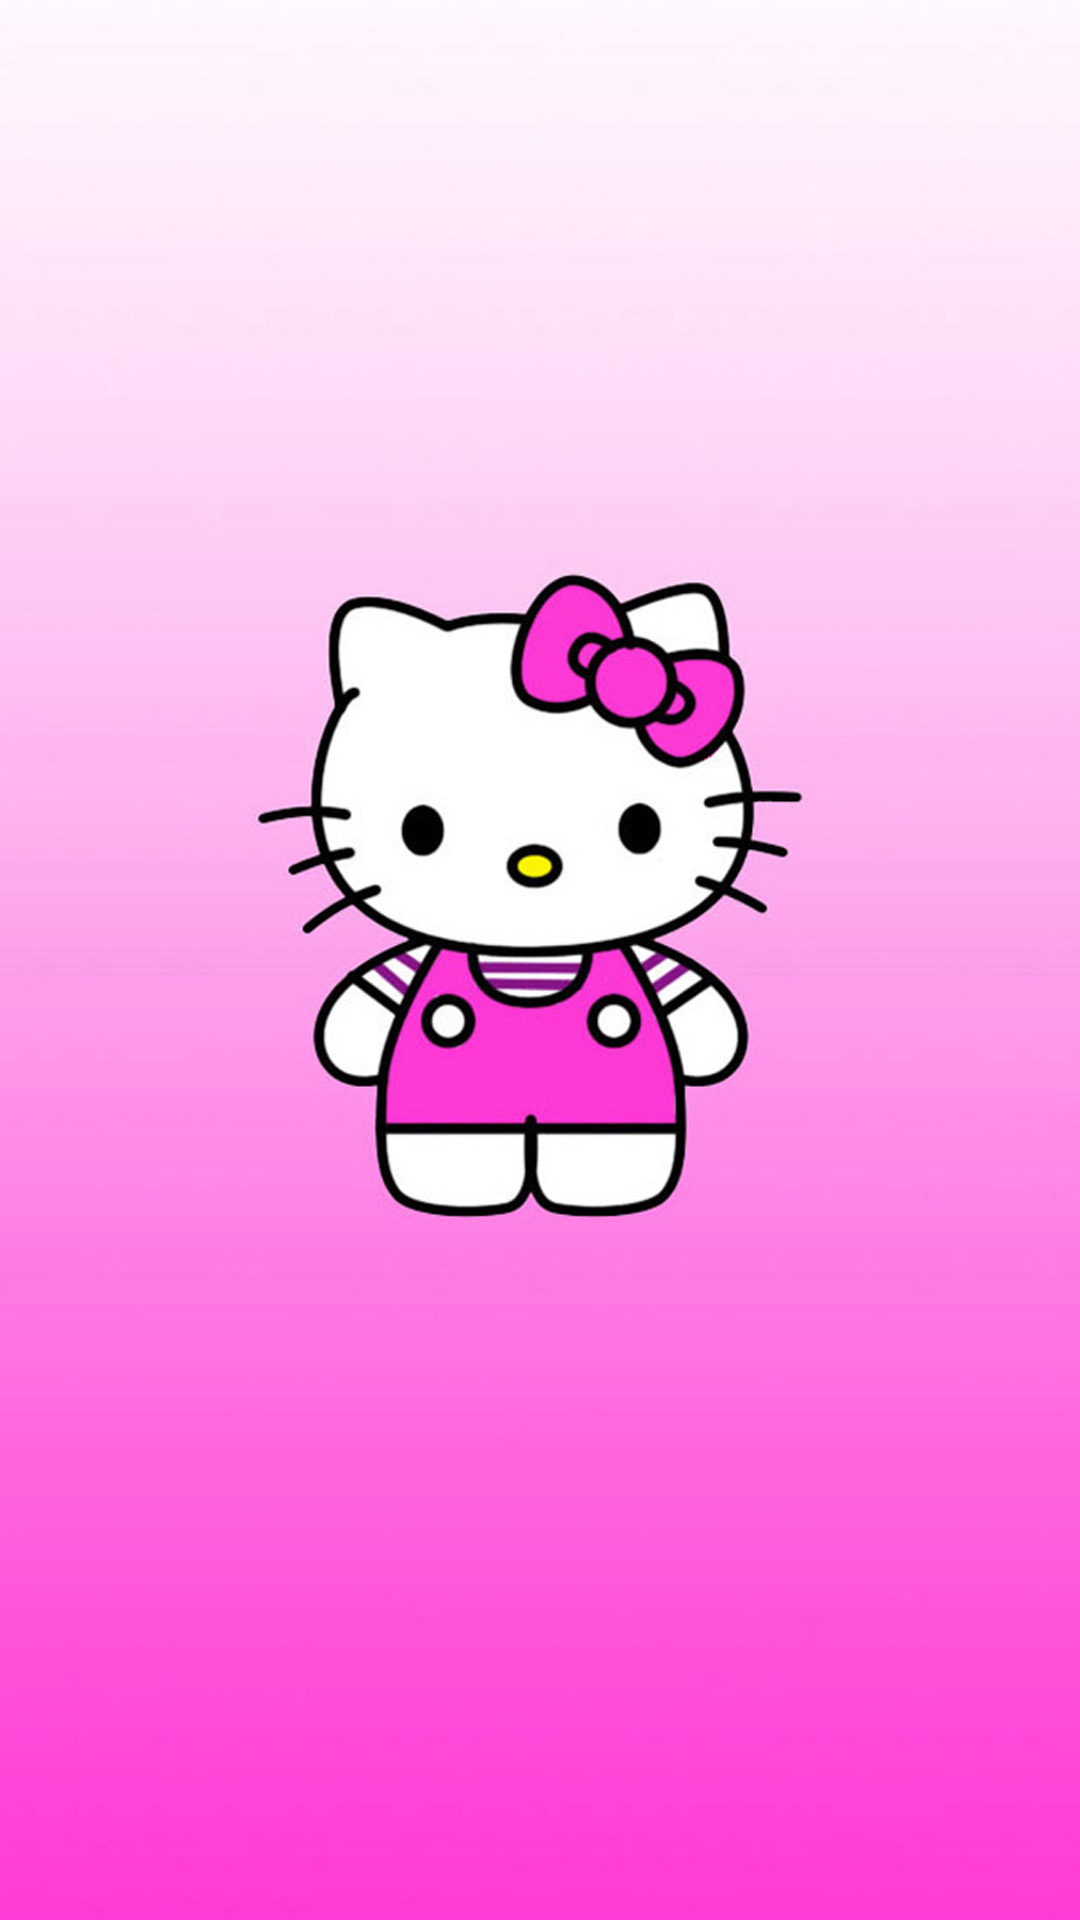 Cute Hello Kitty iPhone Wallpaper iPad